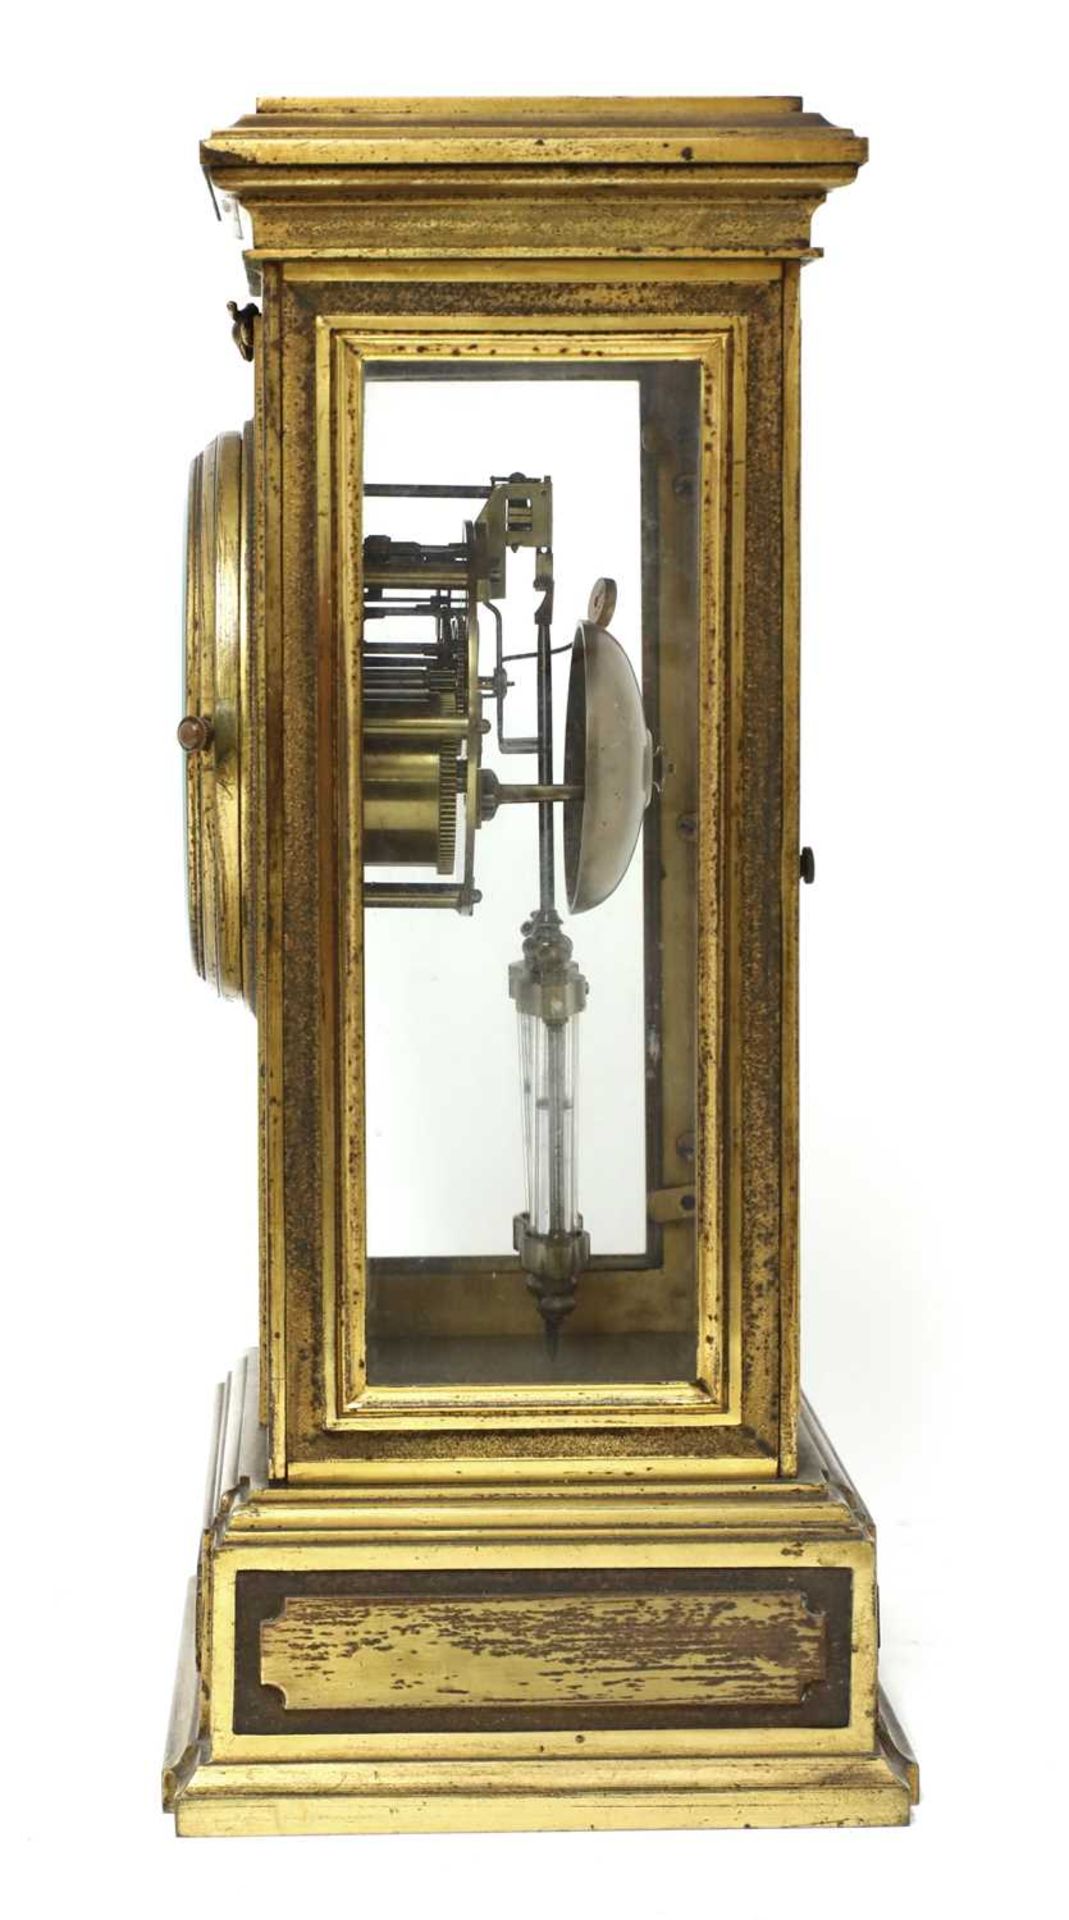 A French ormolu mantel clock, - Image 2 of 3